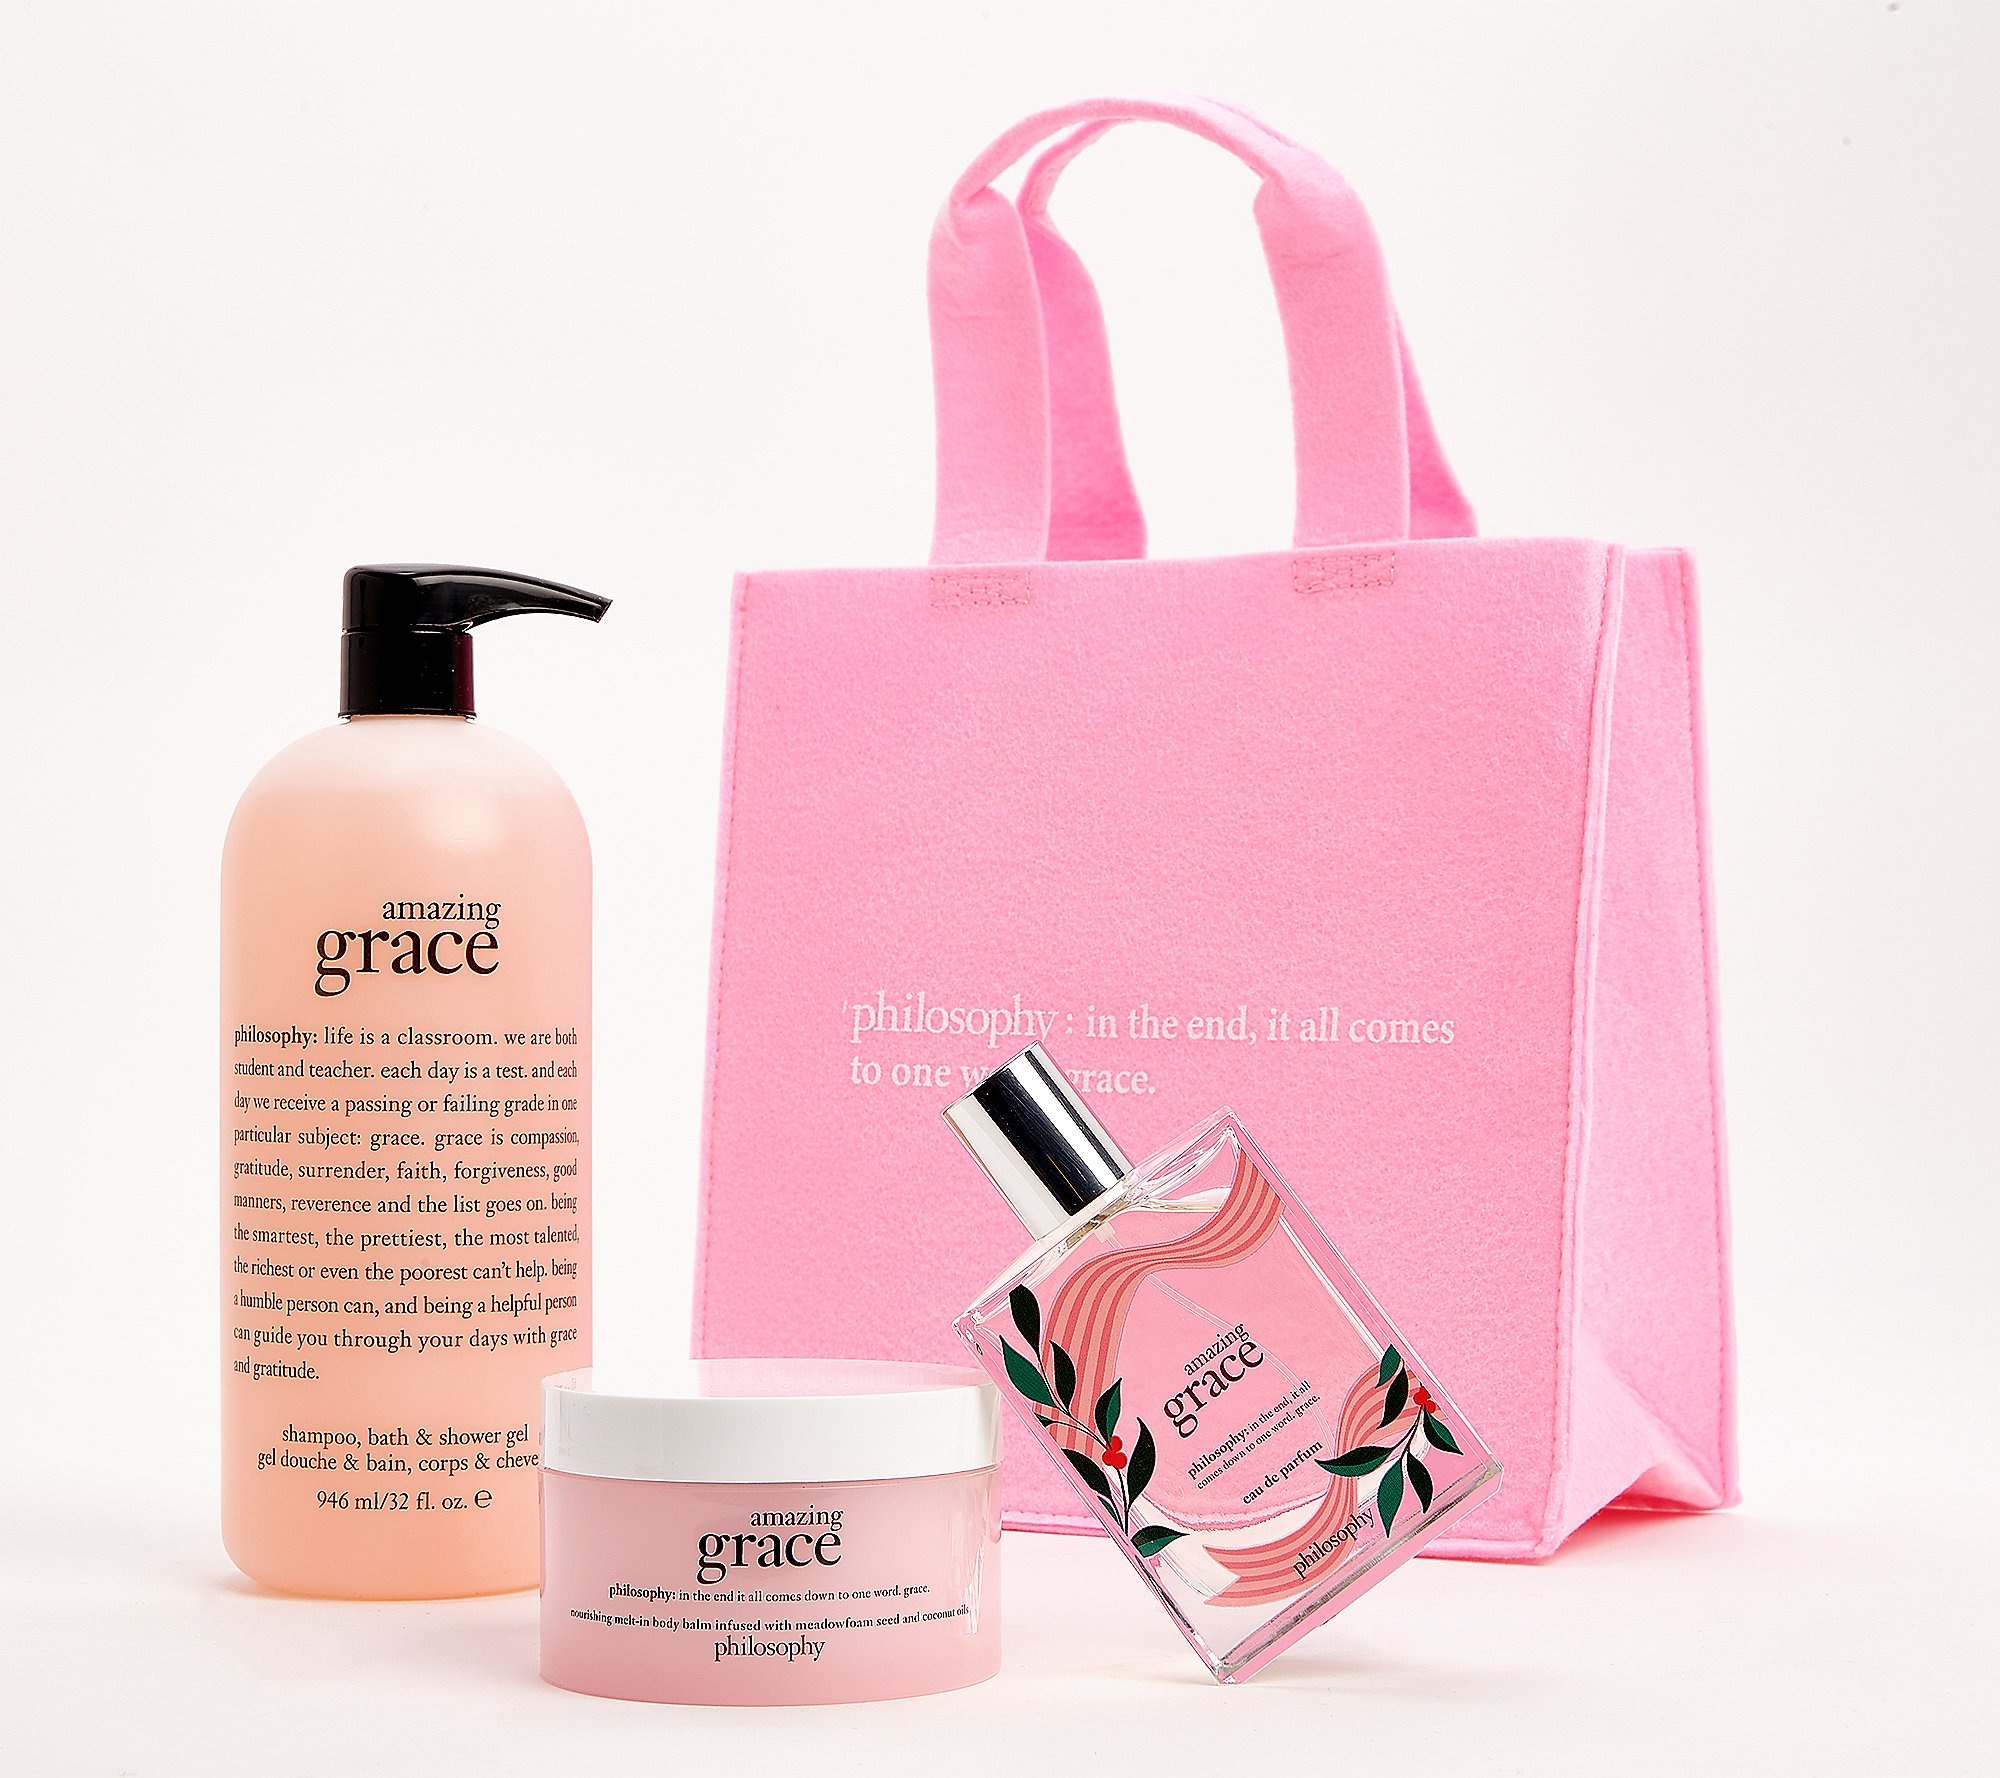 Philosophy grace & love body melt fragrance set with tote bag $57.46